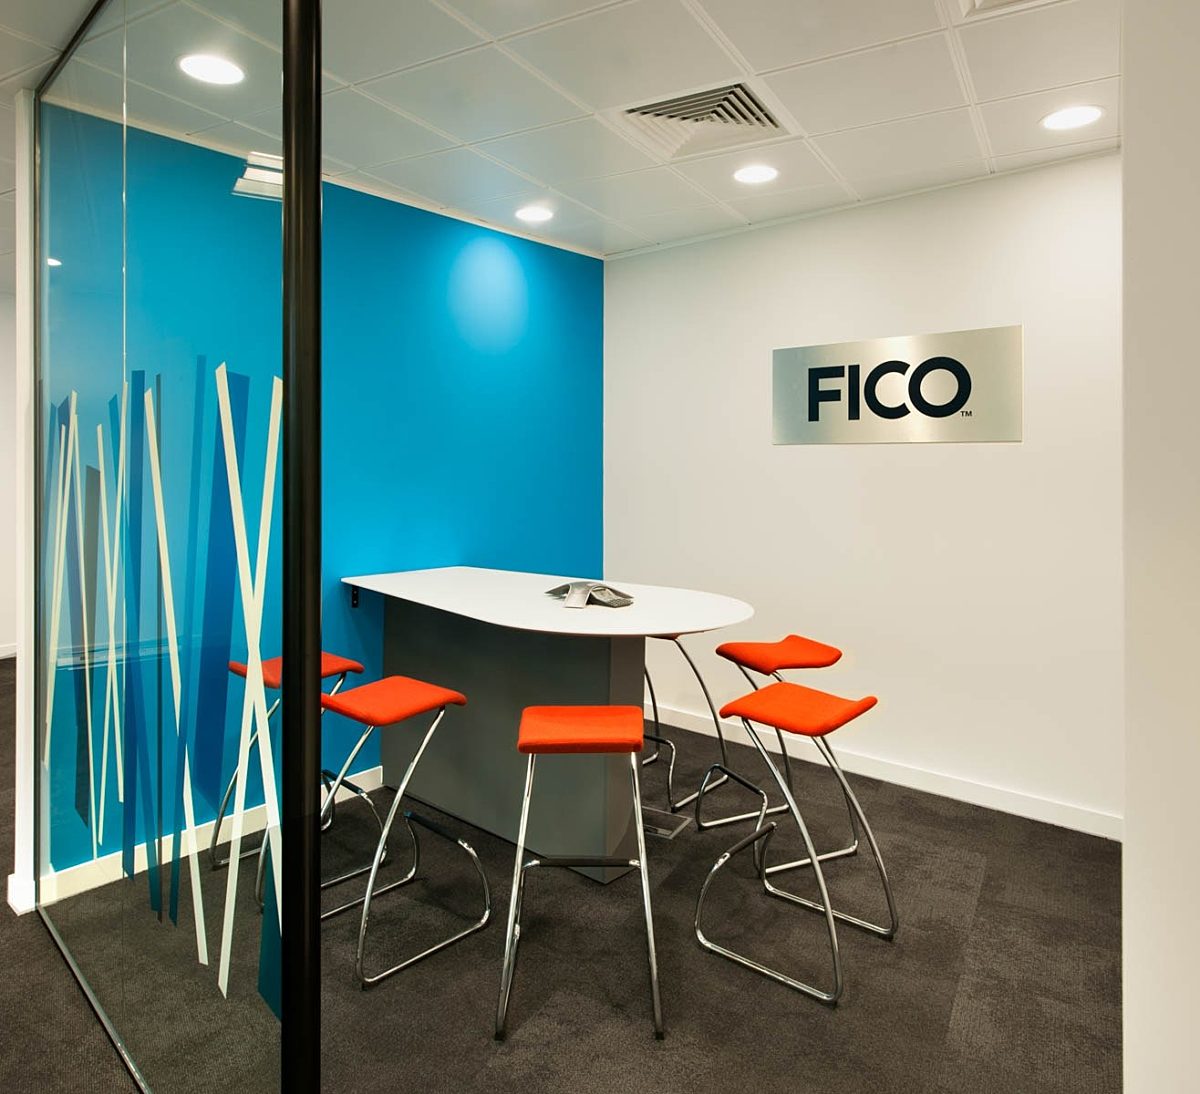 Fico collaborative meeting room design